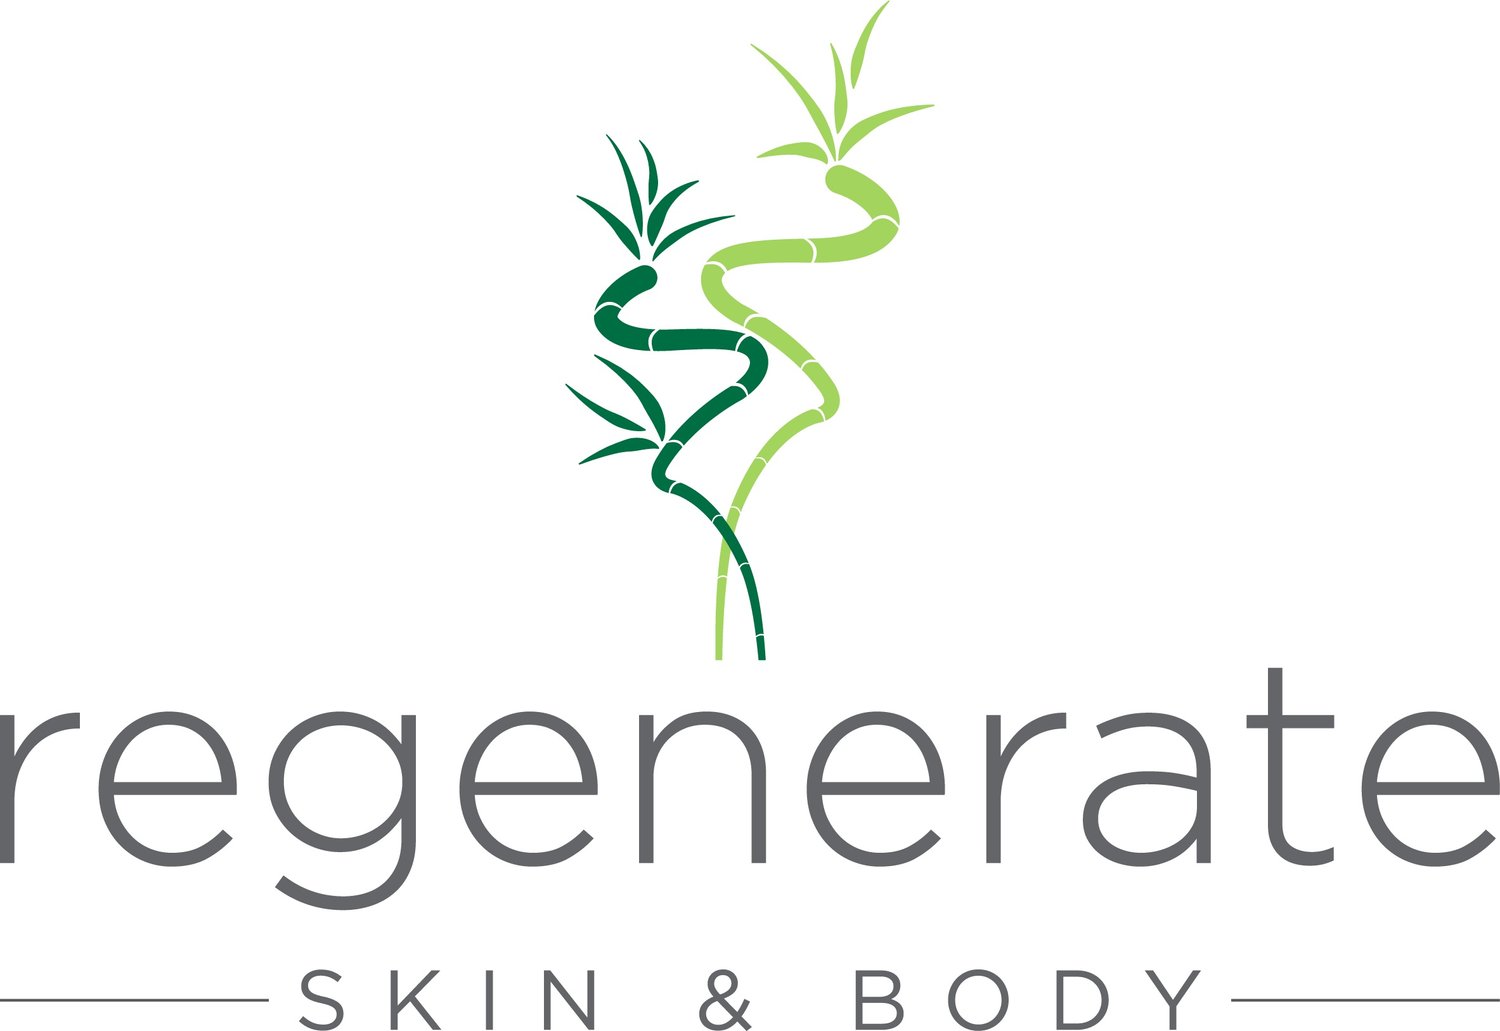 Regenerate Skin & Body